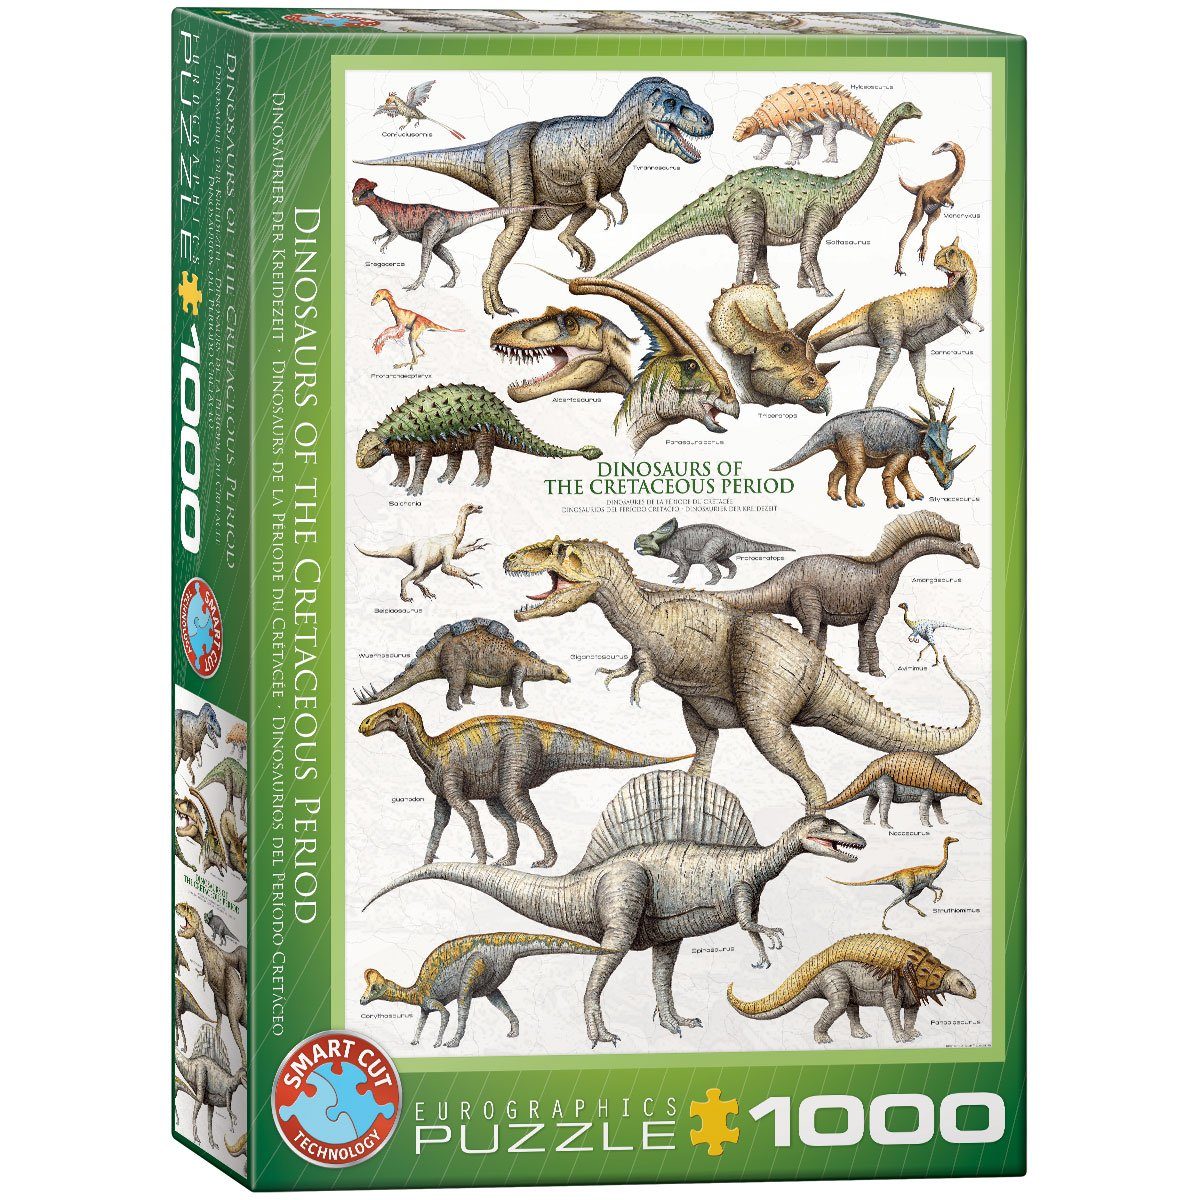 Kreidezeit, Puzzle 1000 EUROGRAPHICS Puzzleteile EuroGraphics Dinosaurier 6000-0098 der